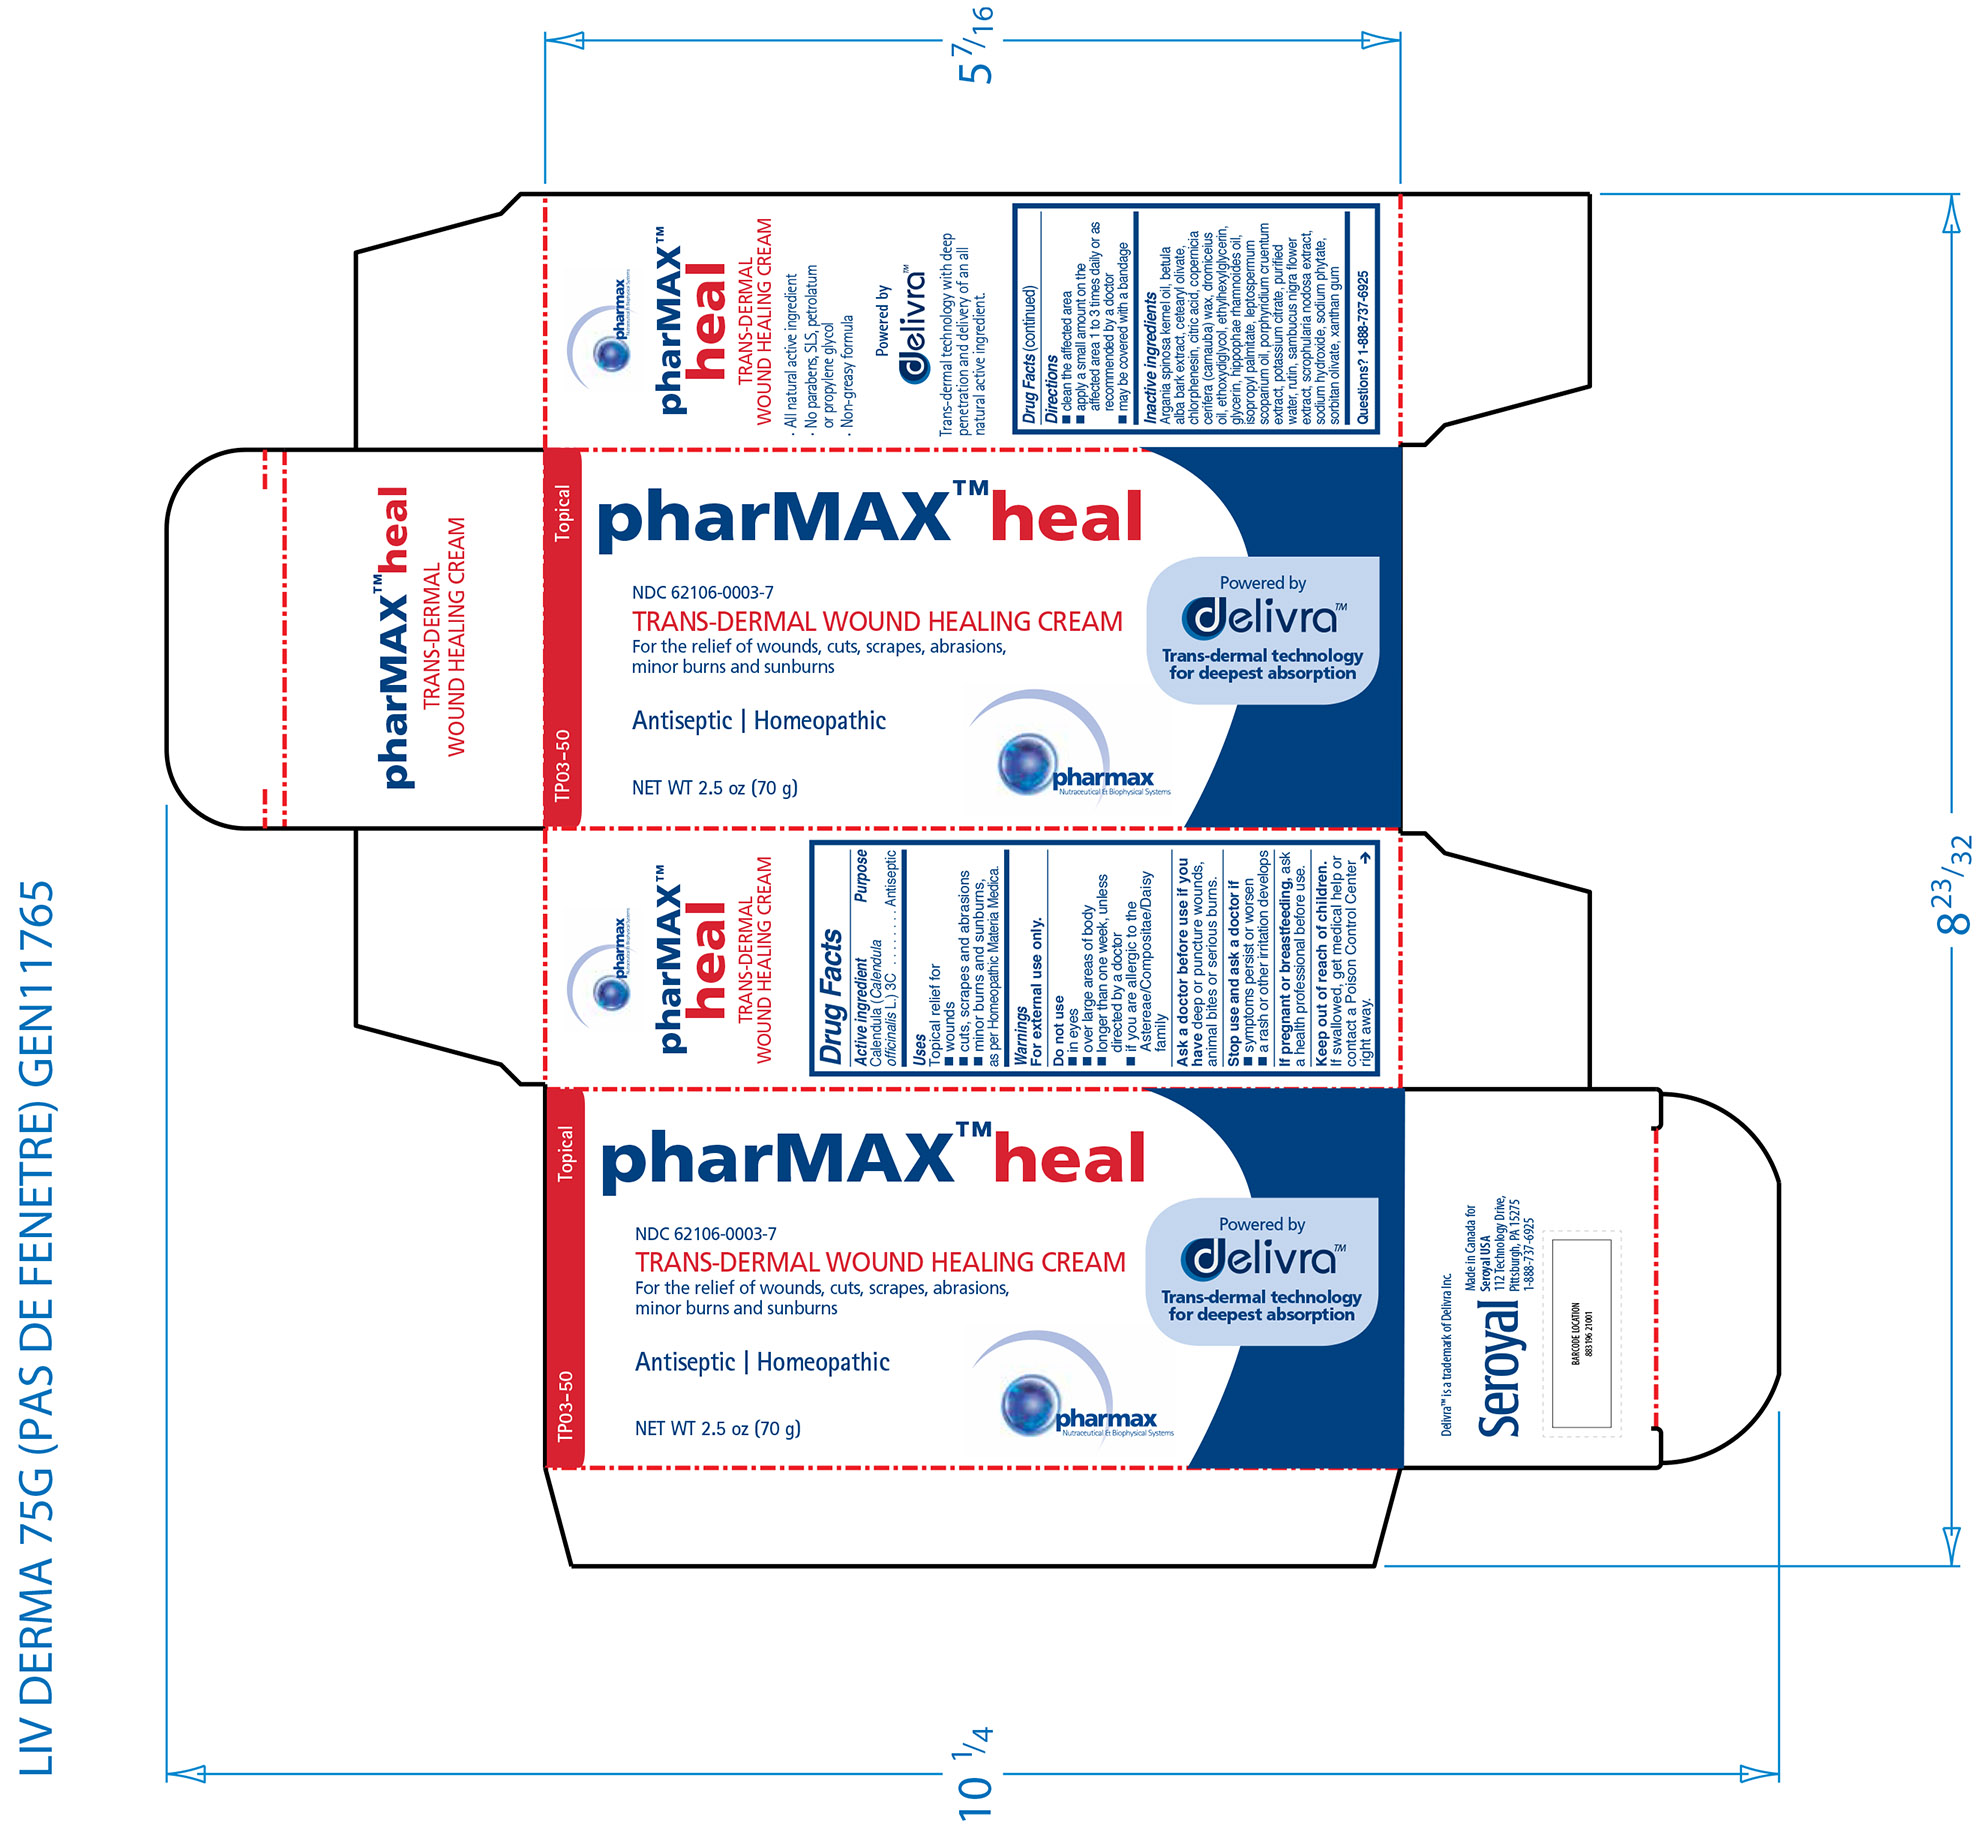 pharMAX heal - 62106-0003-7